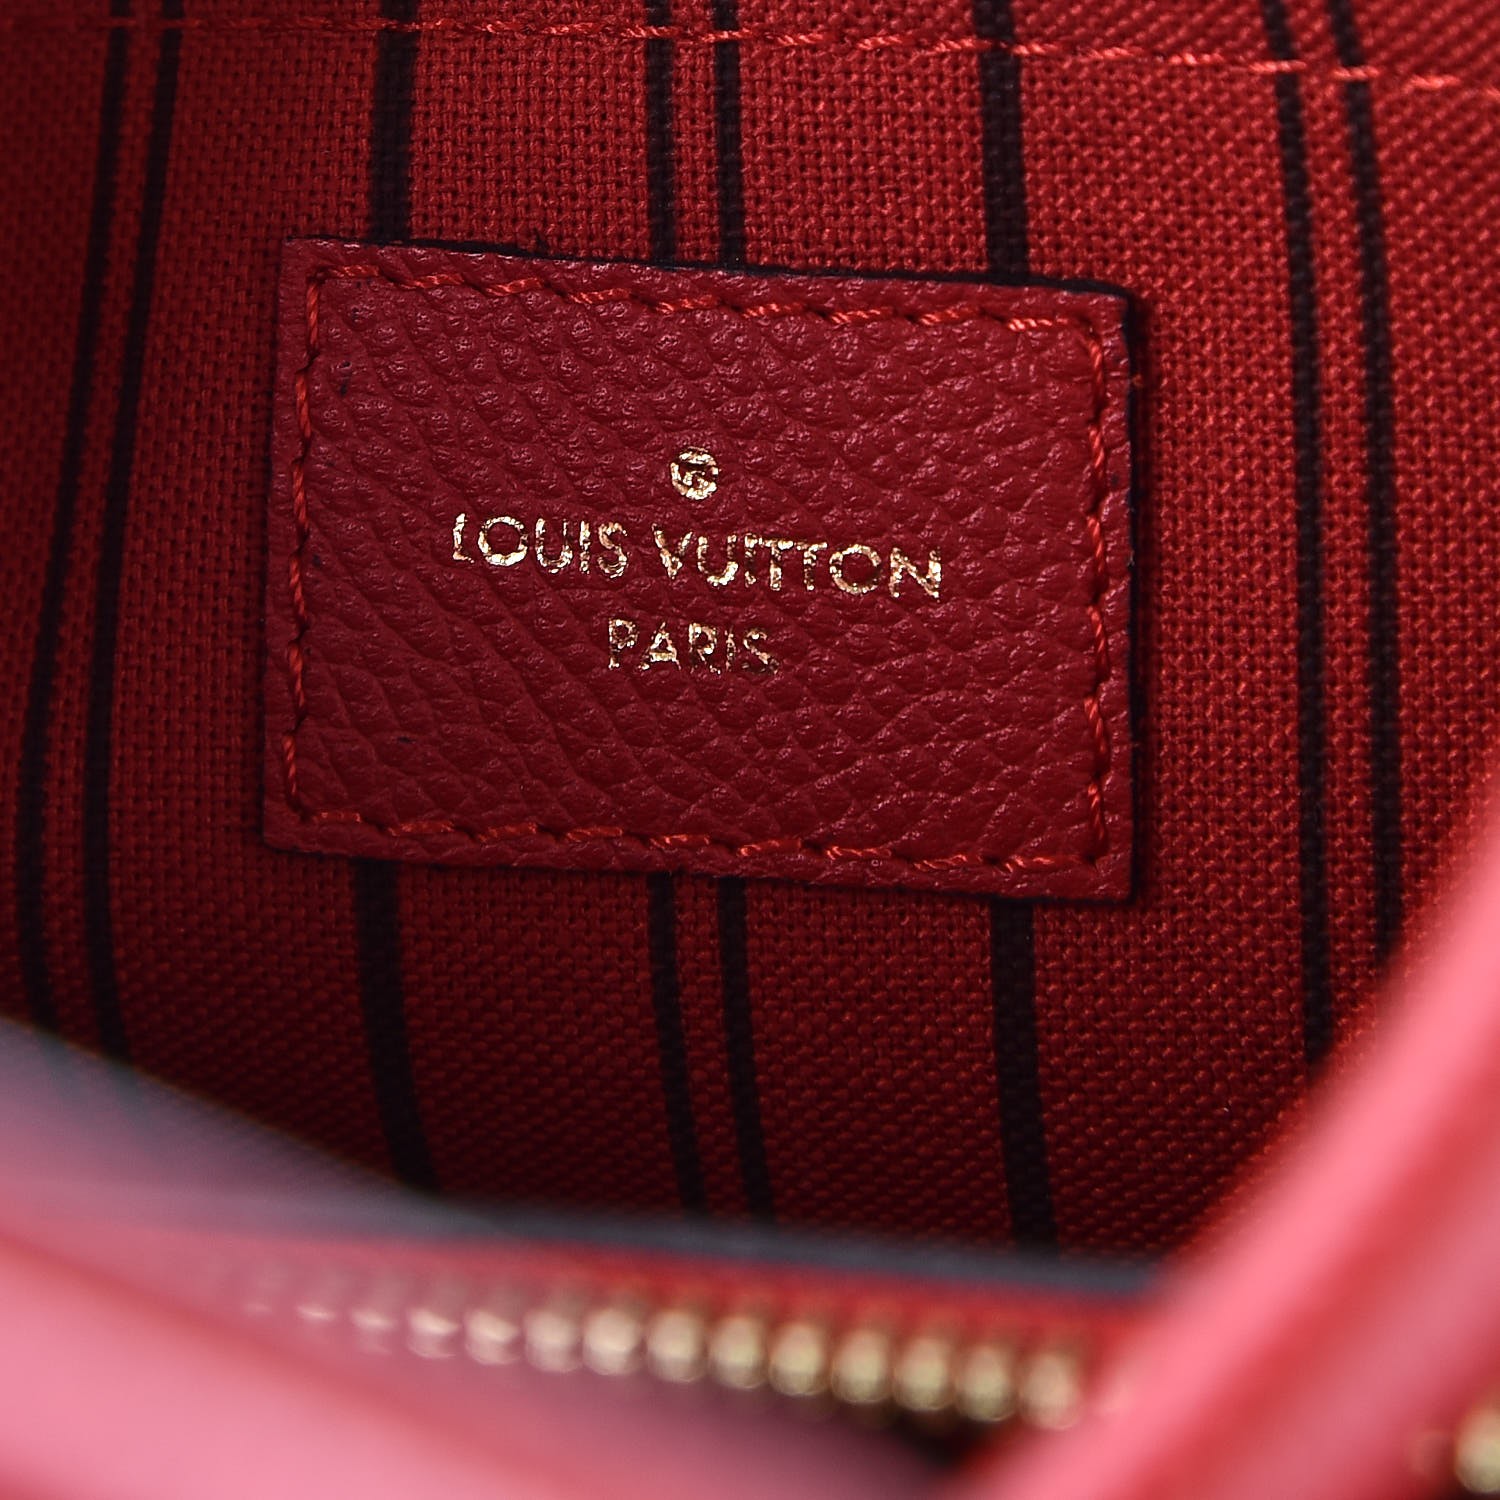 Louis Vuitton Melie Bag, Bragmybag